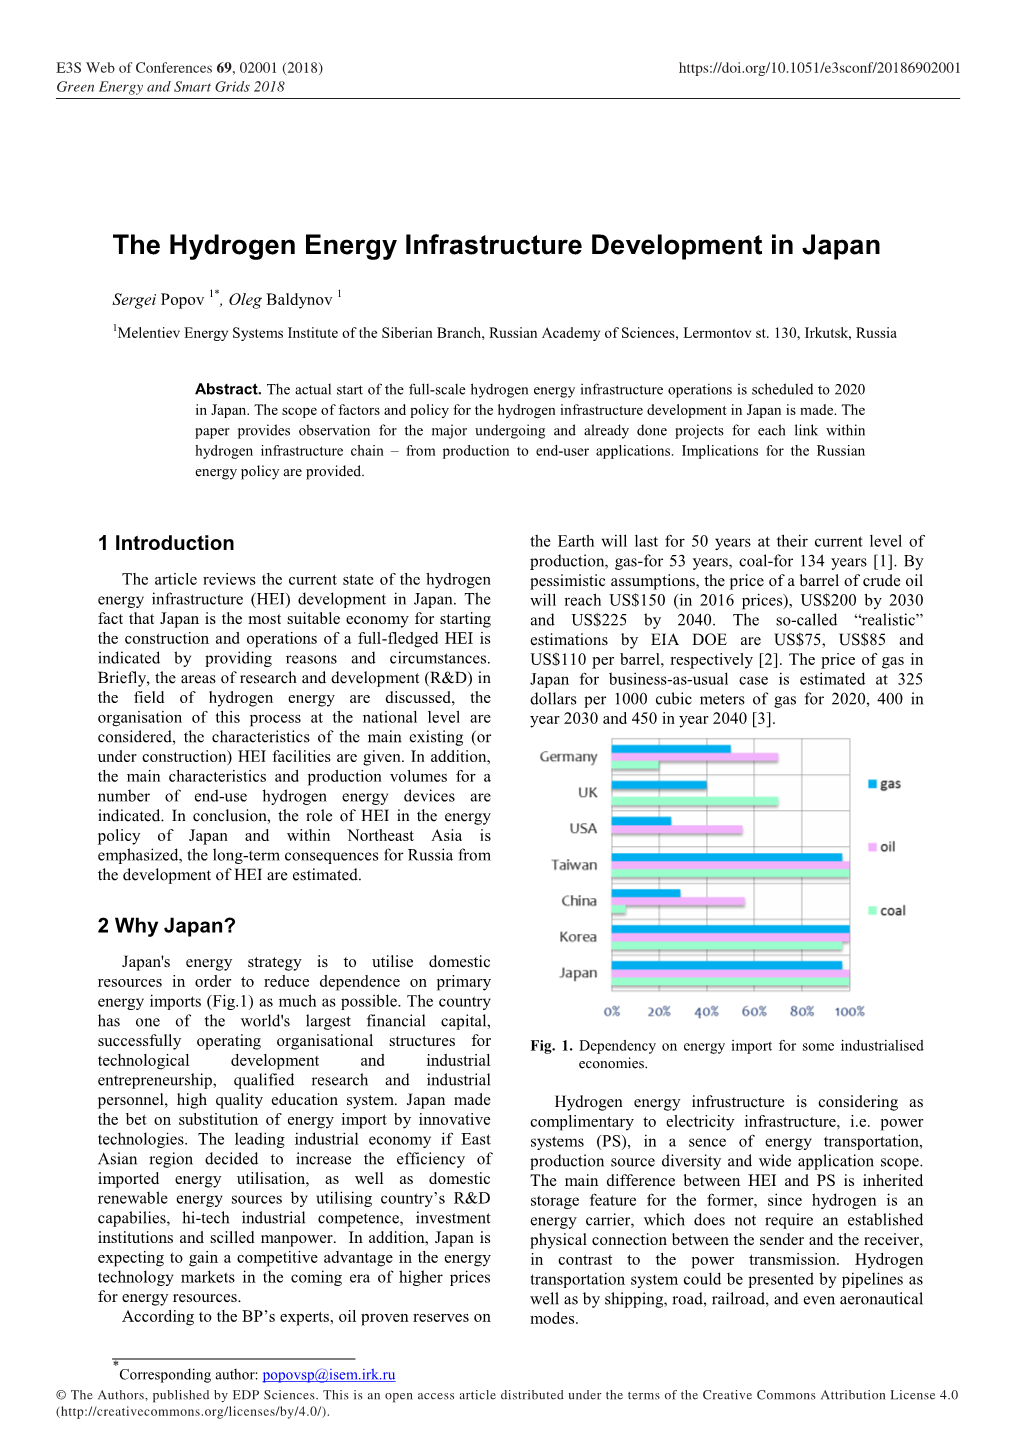 The Hydrogen Energy Infrastructure Development in Japan